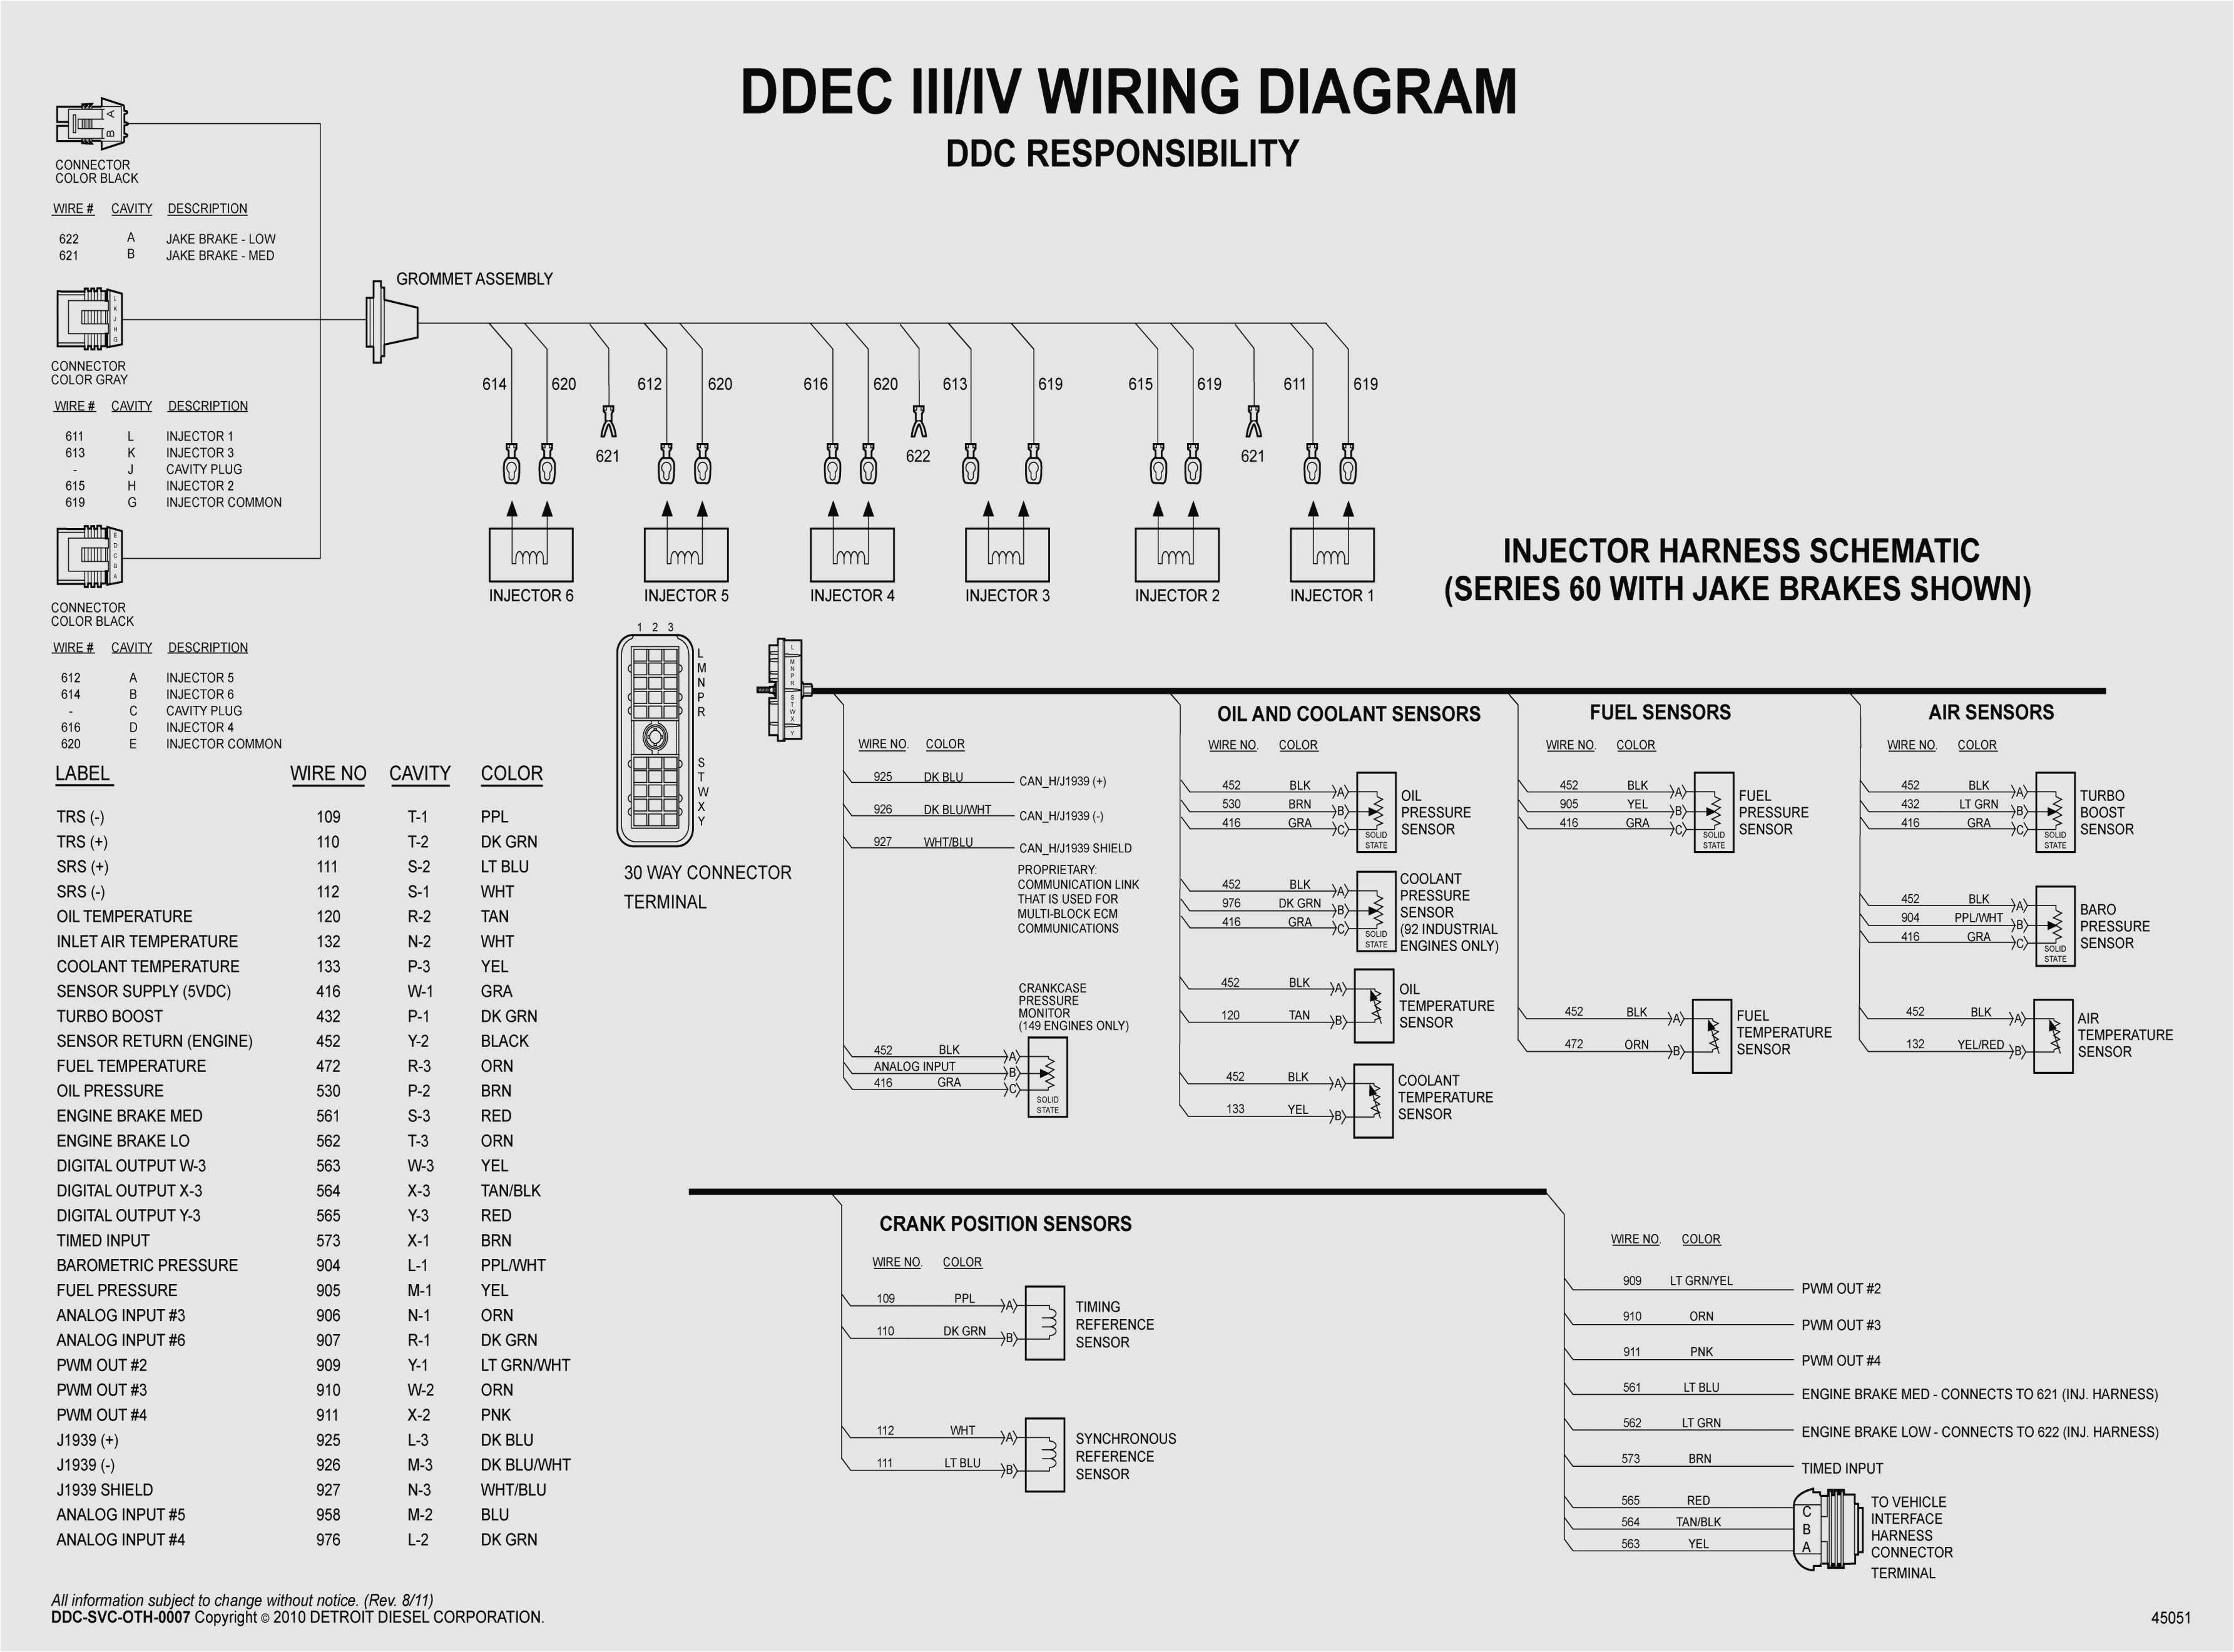 ddec iv wiring diagram wiring diagram mega detroit diesel ddec iv wiring diagram ddec iv wiring diagram